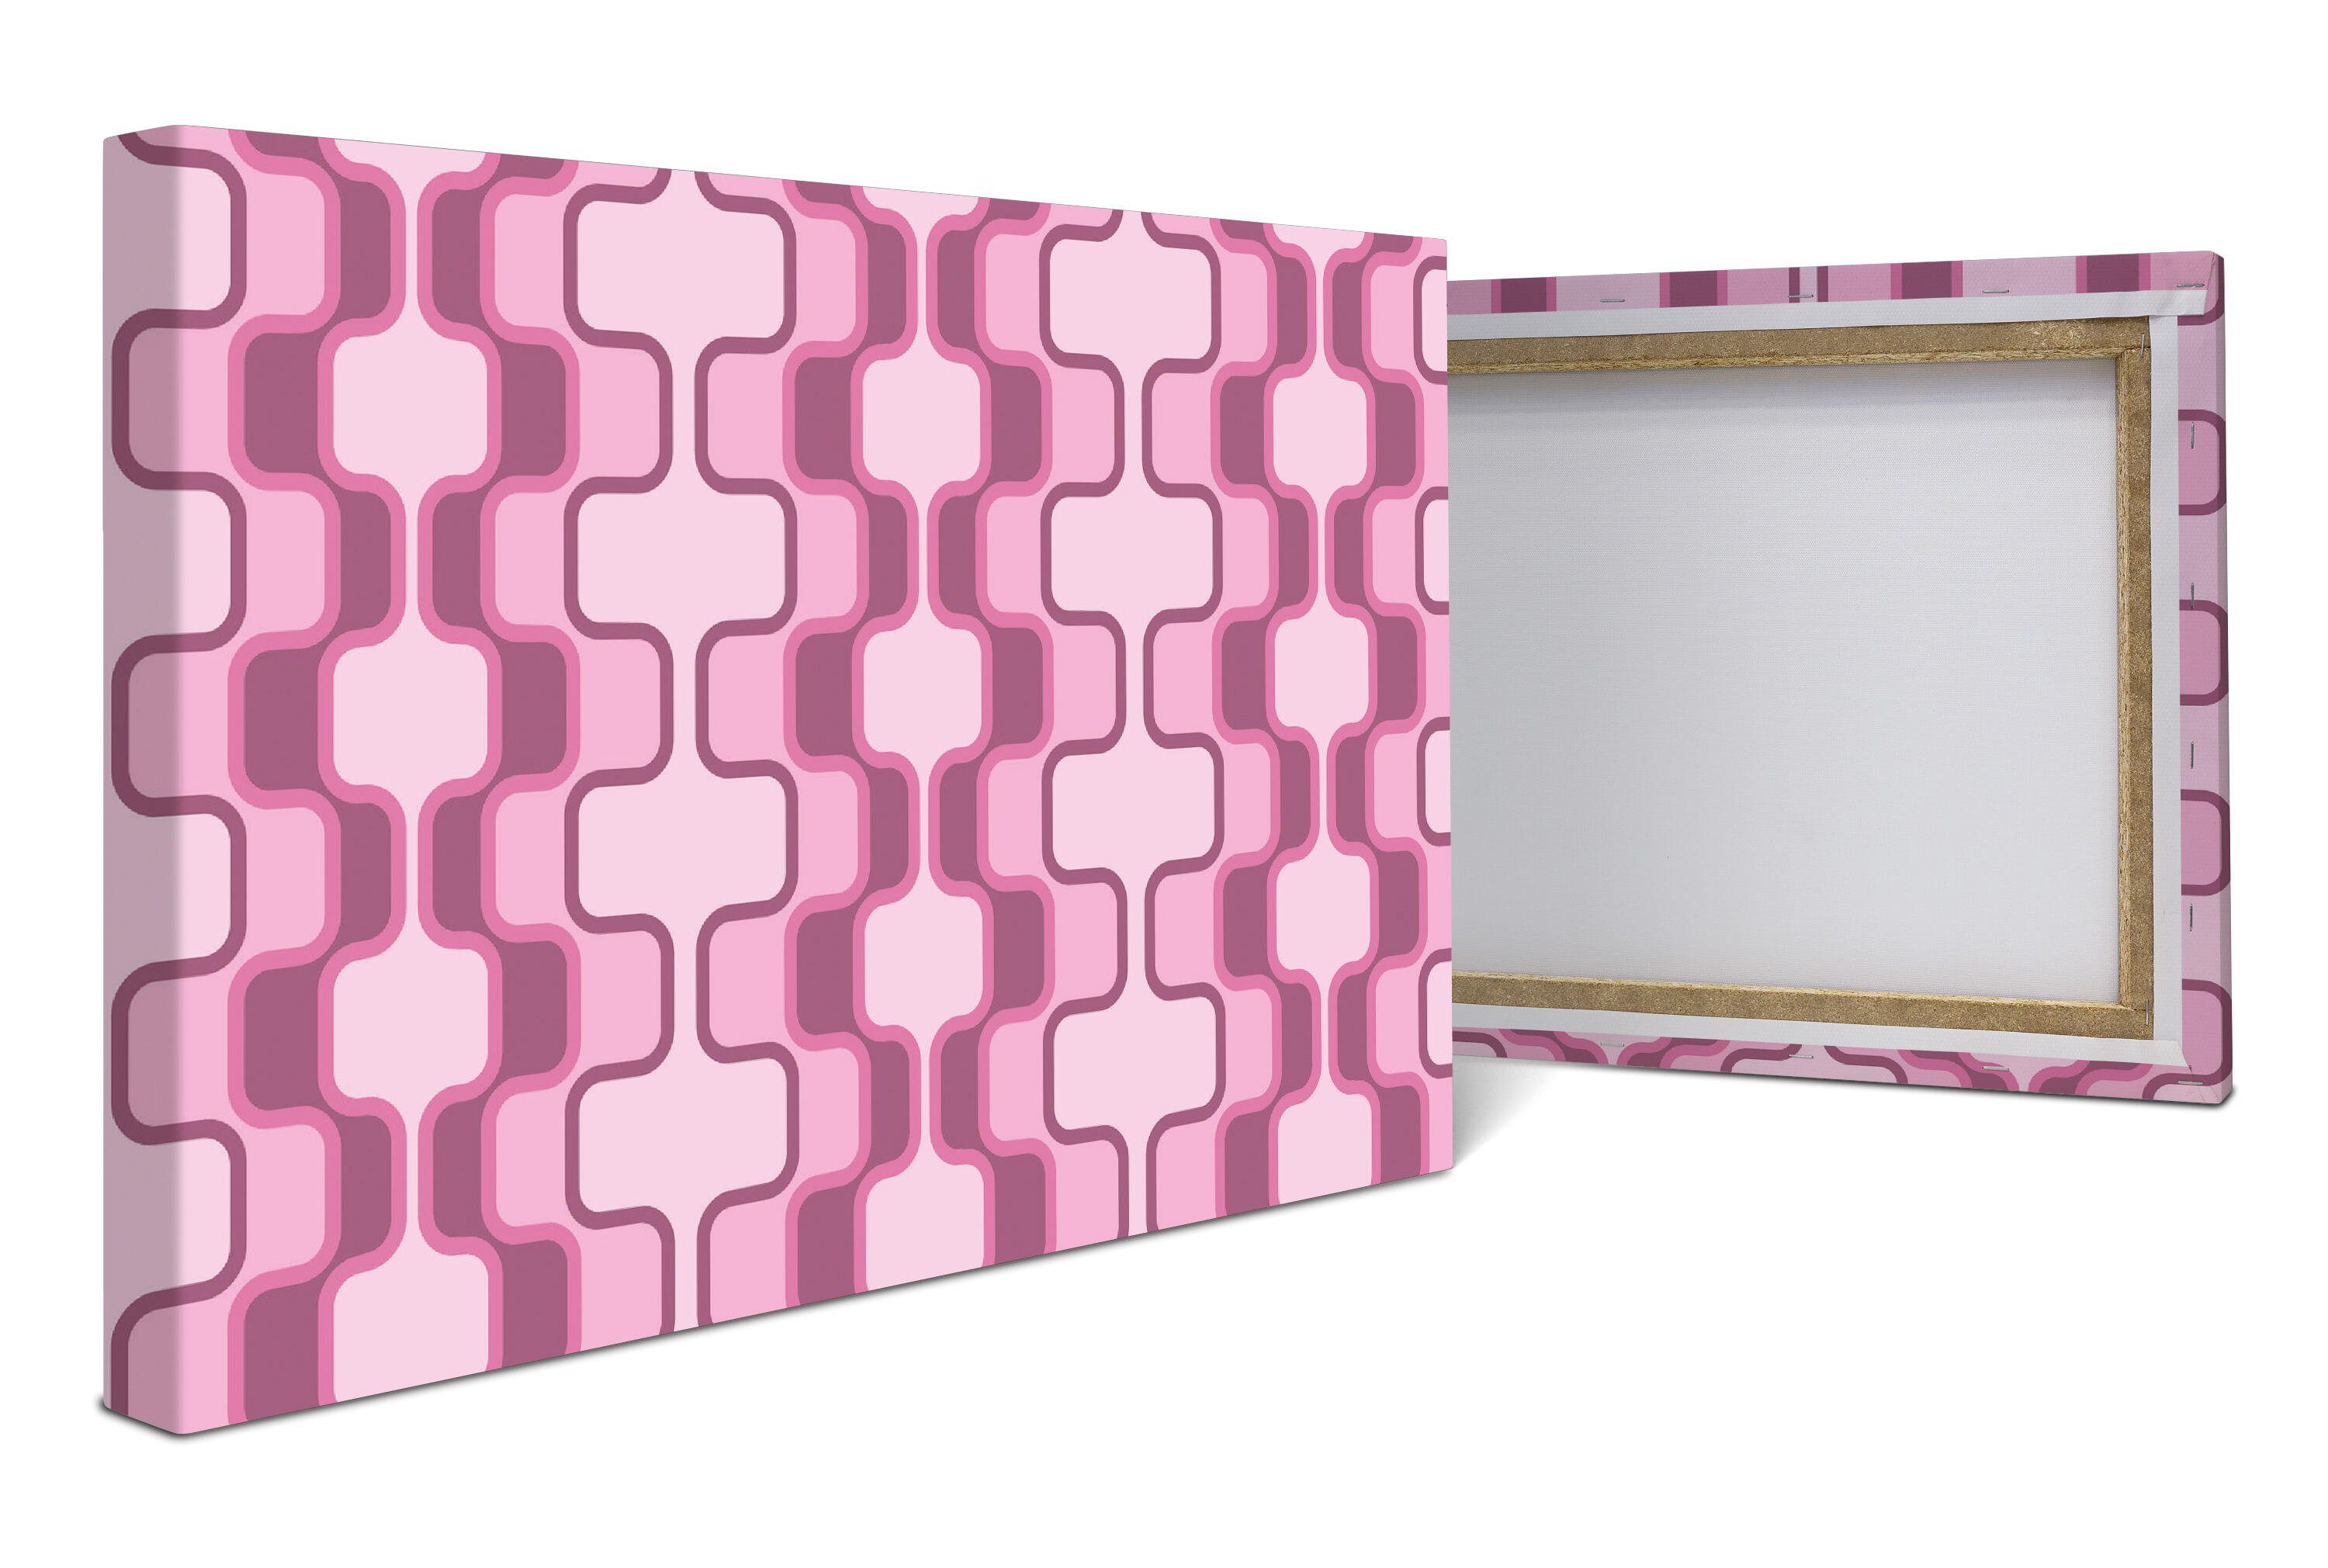 wandmotiv24 Leinwandbild Retromuster Pink Muster, Abstrakt (1 St), Wandbild, Wanddeko, Leinwandbilder in versch. Größen